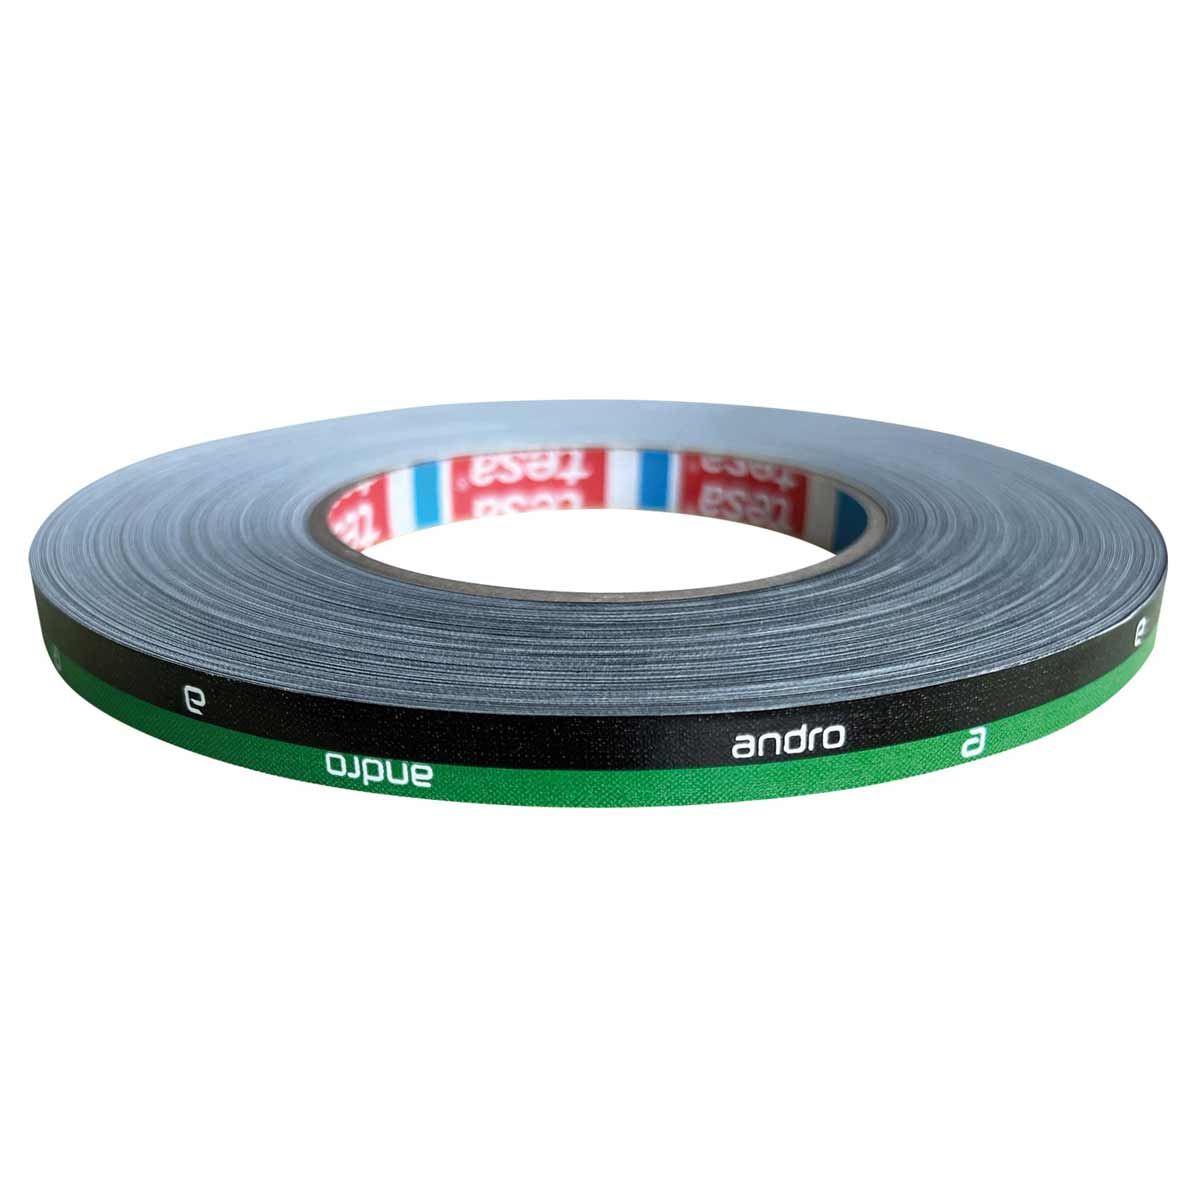 andro Kantenband Stripes 10mm/50m schwarz/grün